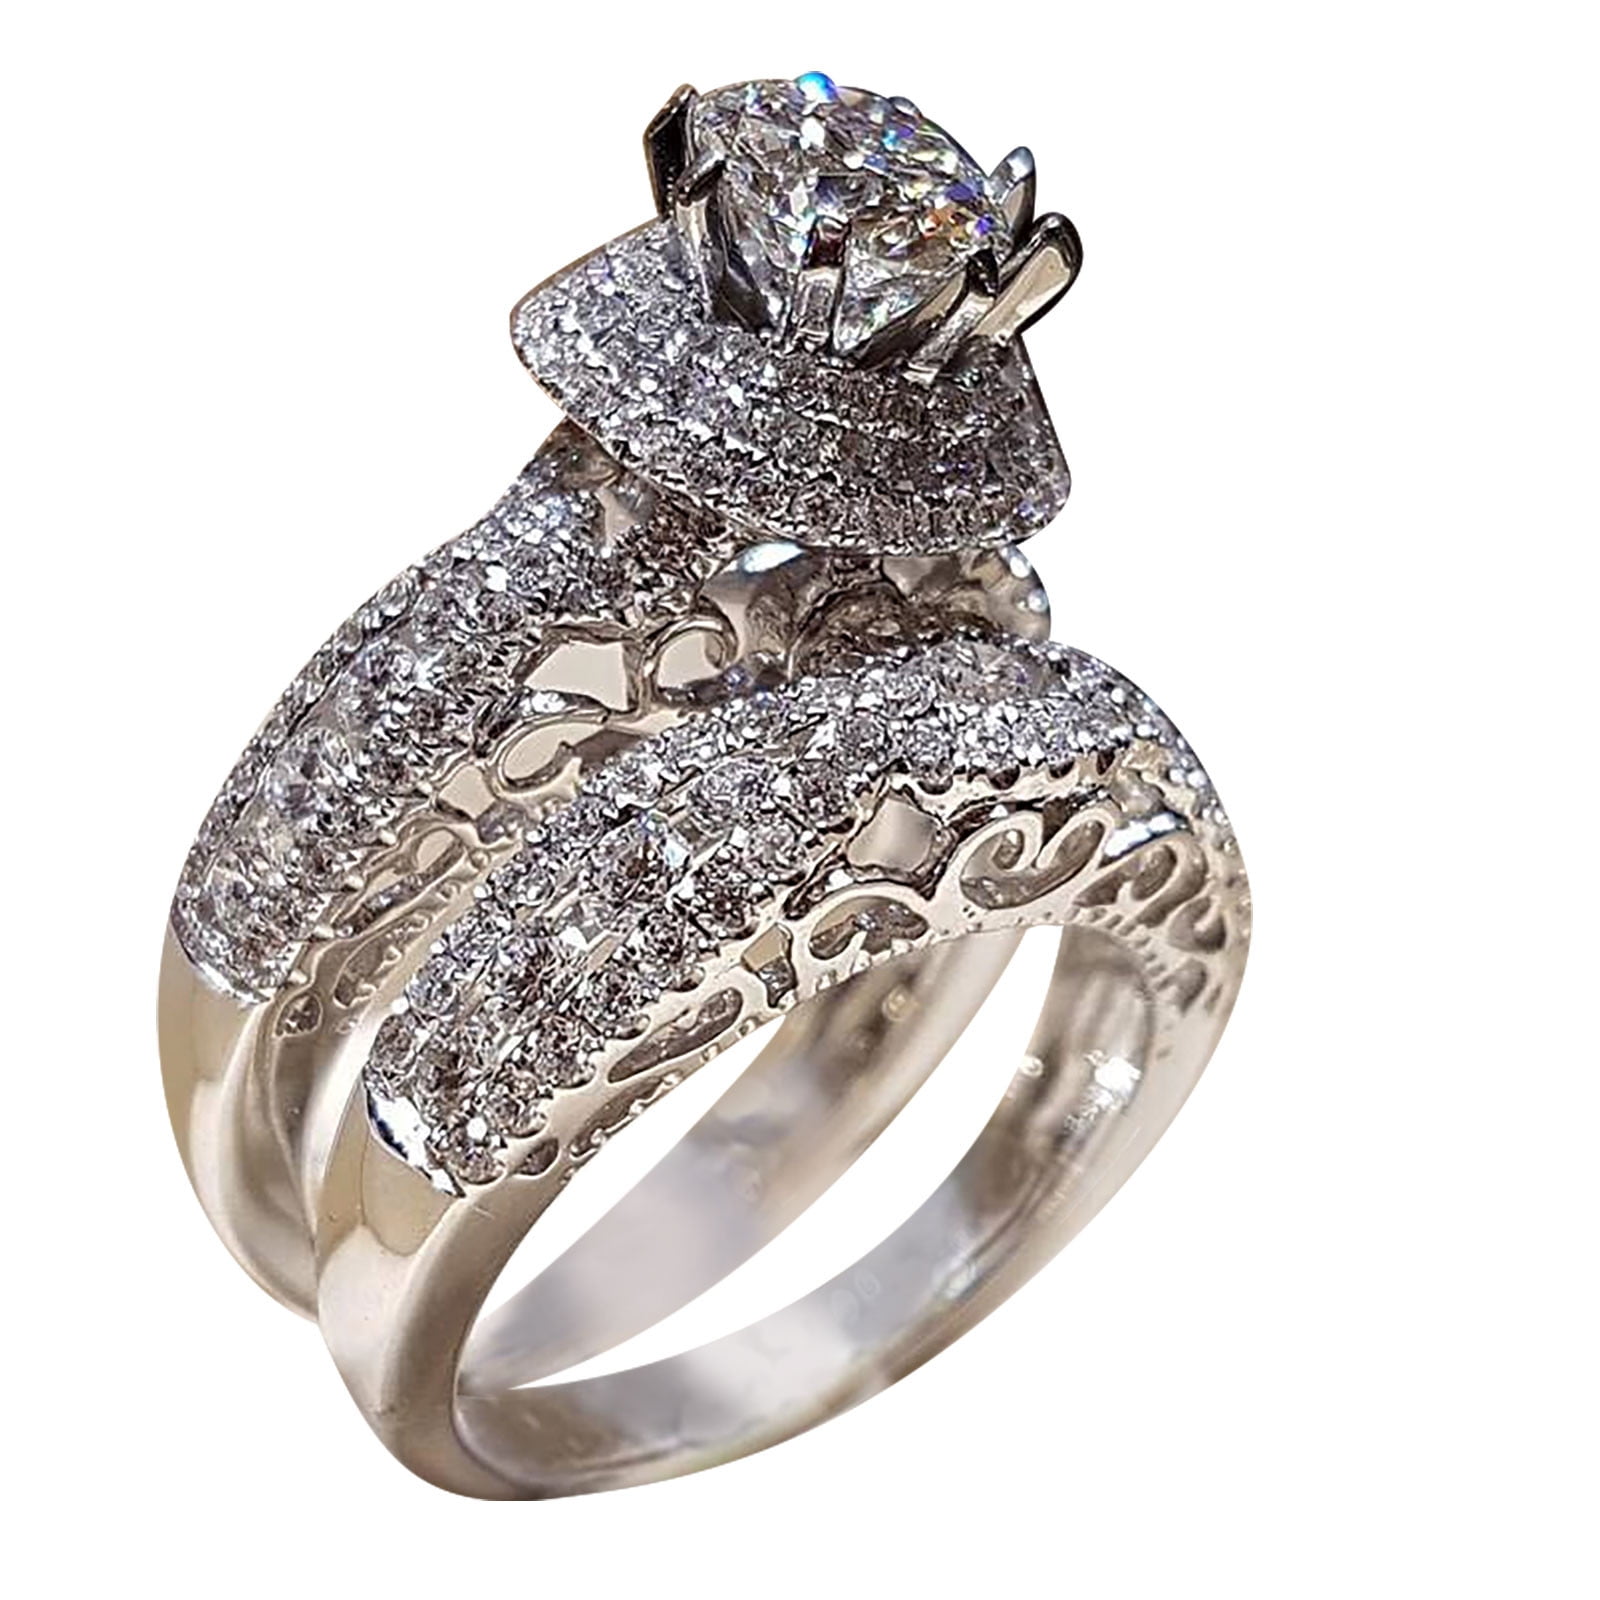 NEW Authentic PANDORA Sterling Silver My Princess Tiara Crown Ring | eBay